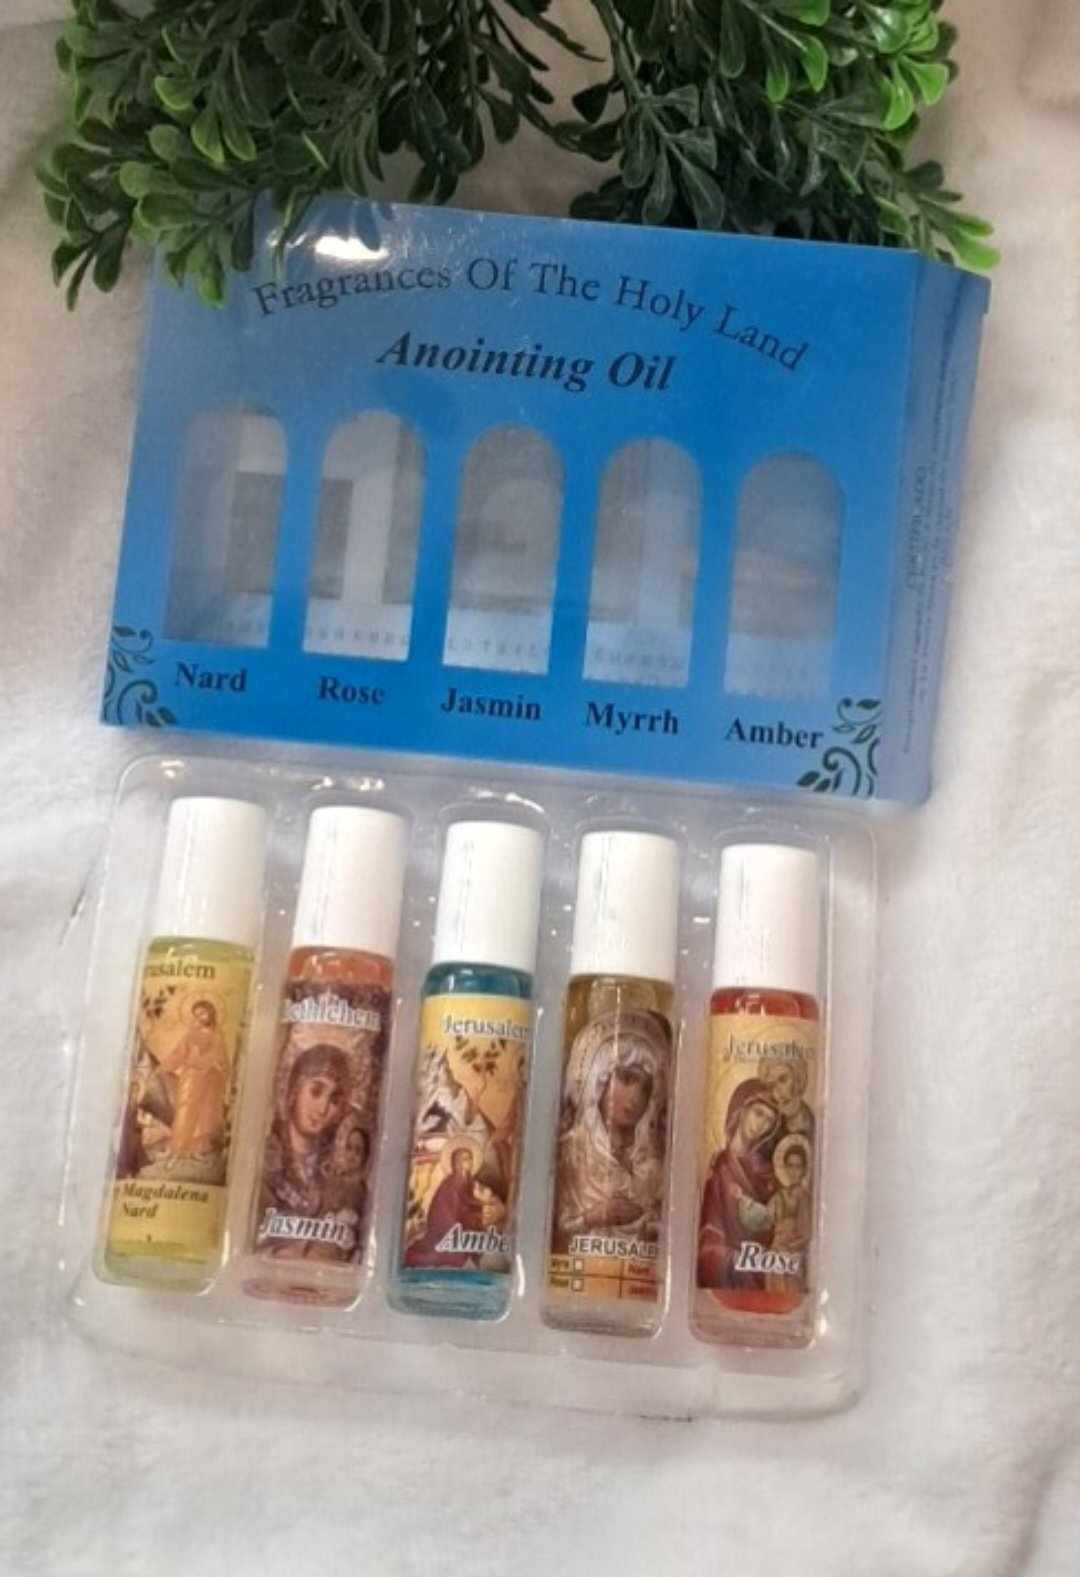 Fragrances of the Holy Land (Anointing Oil ) 5 bottles